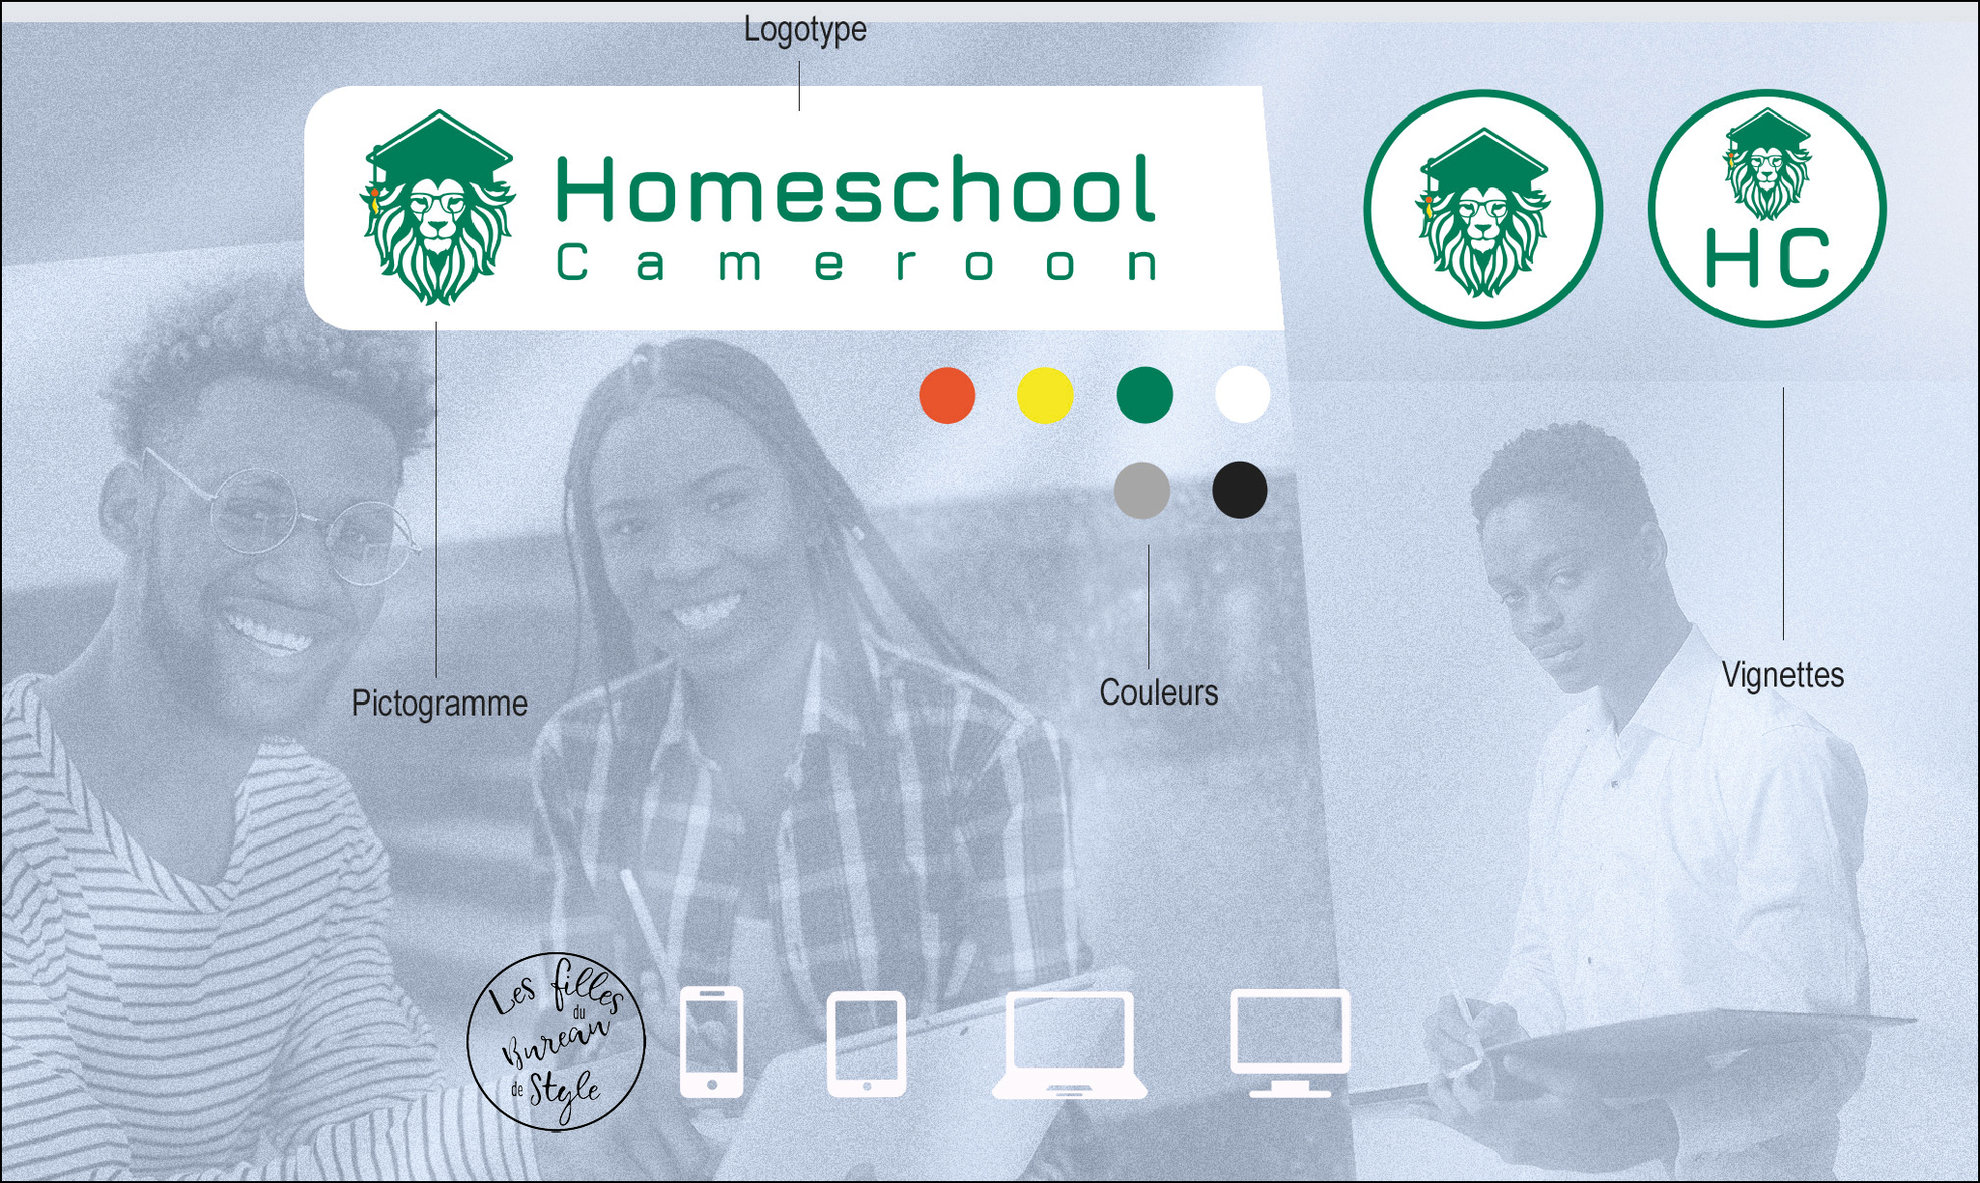 Homeschool Cameroon, identité visuelle